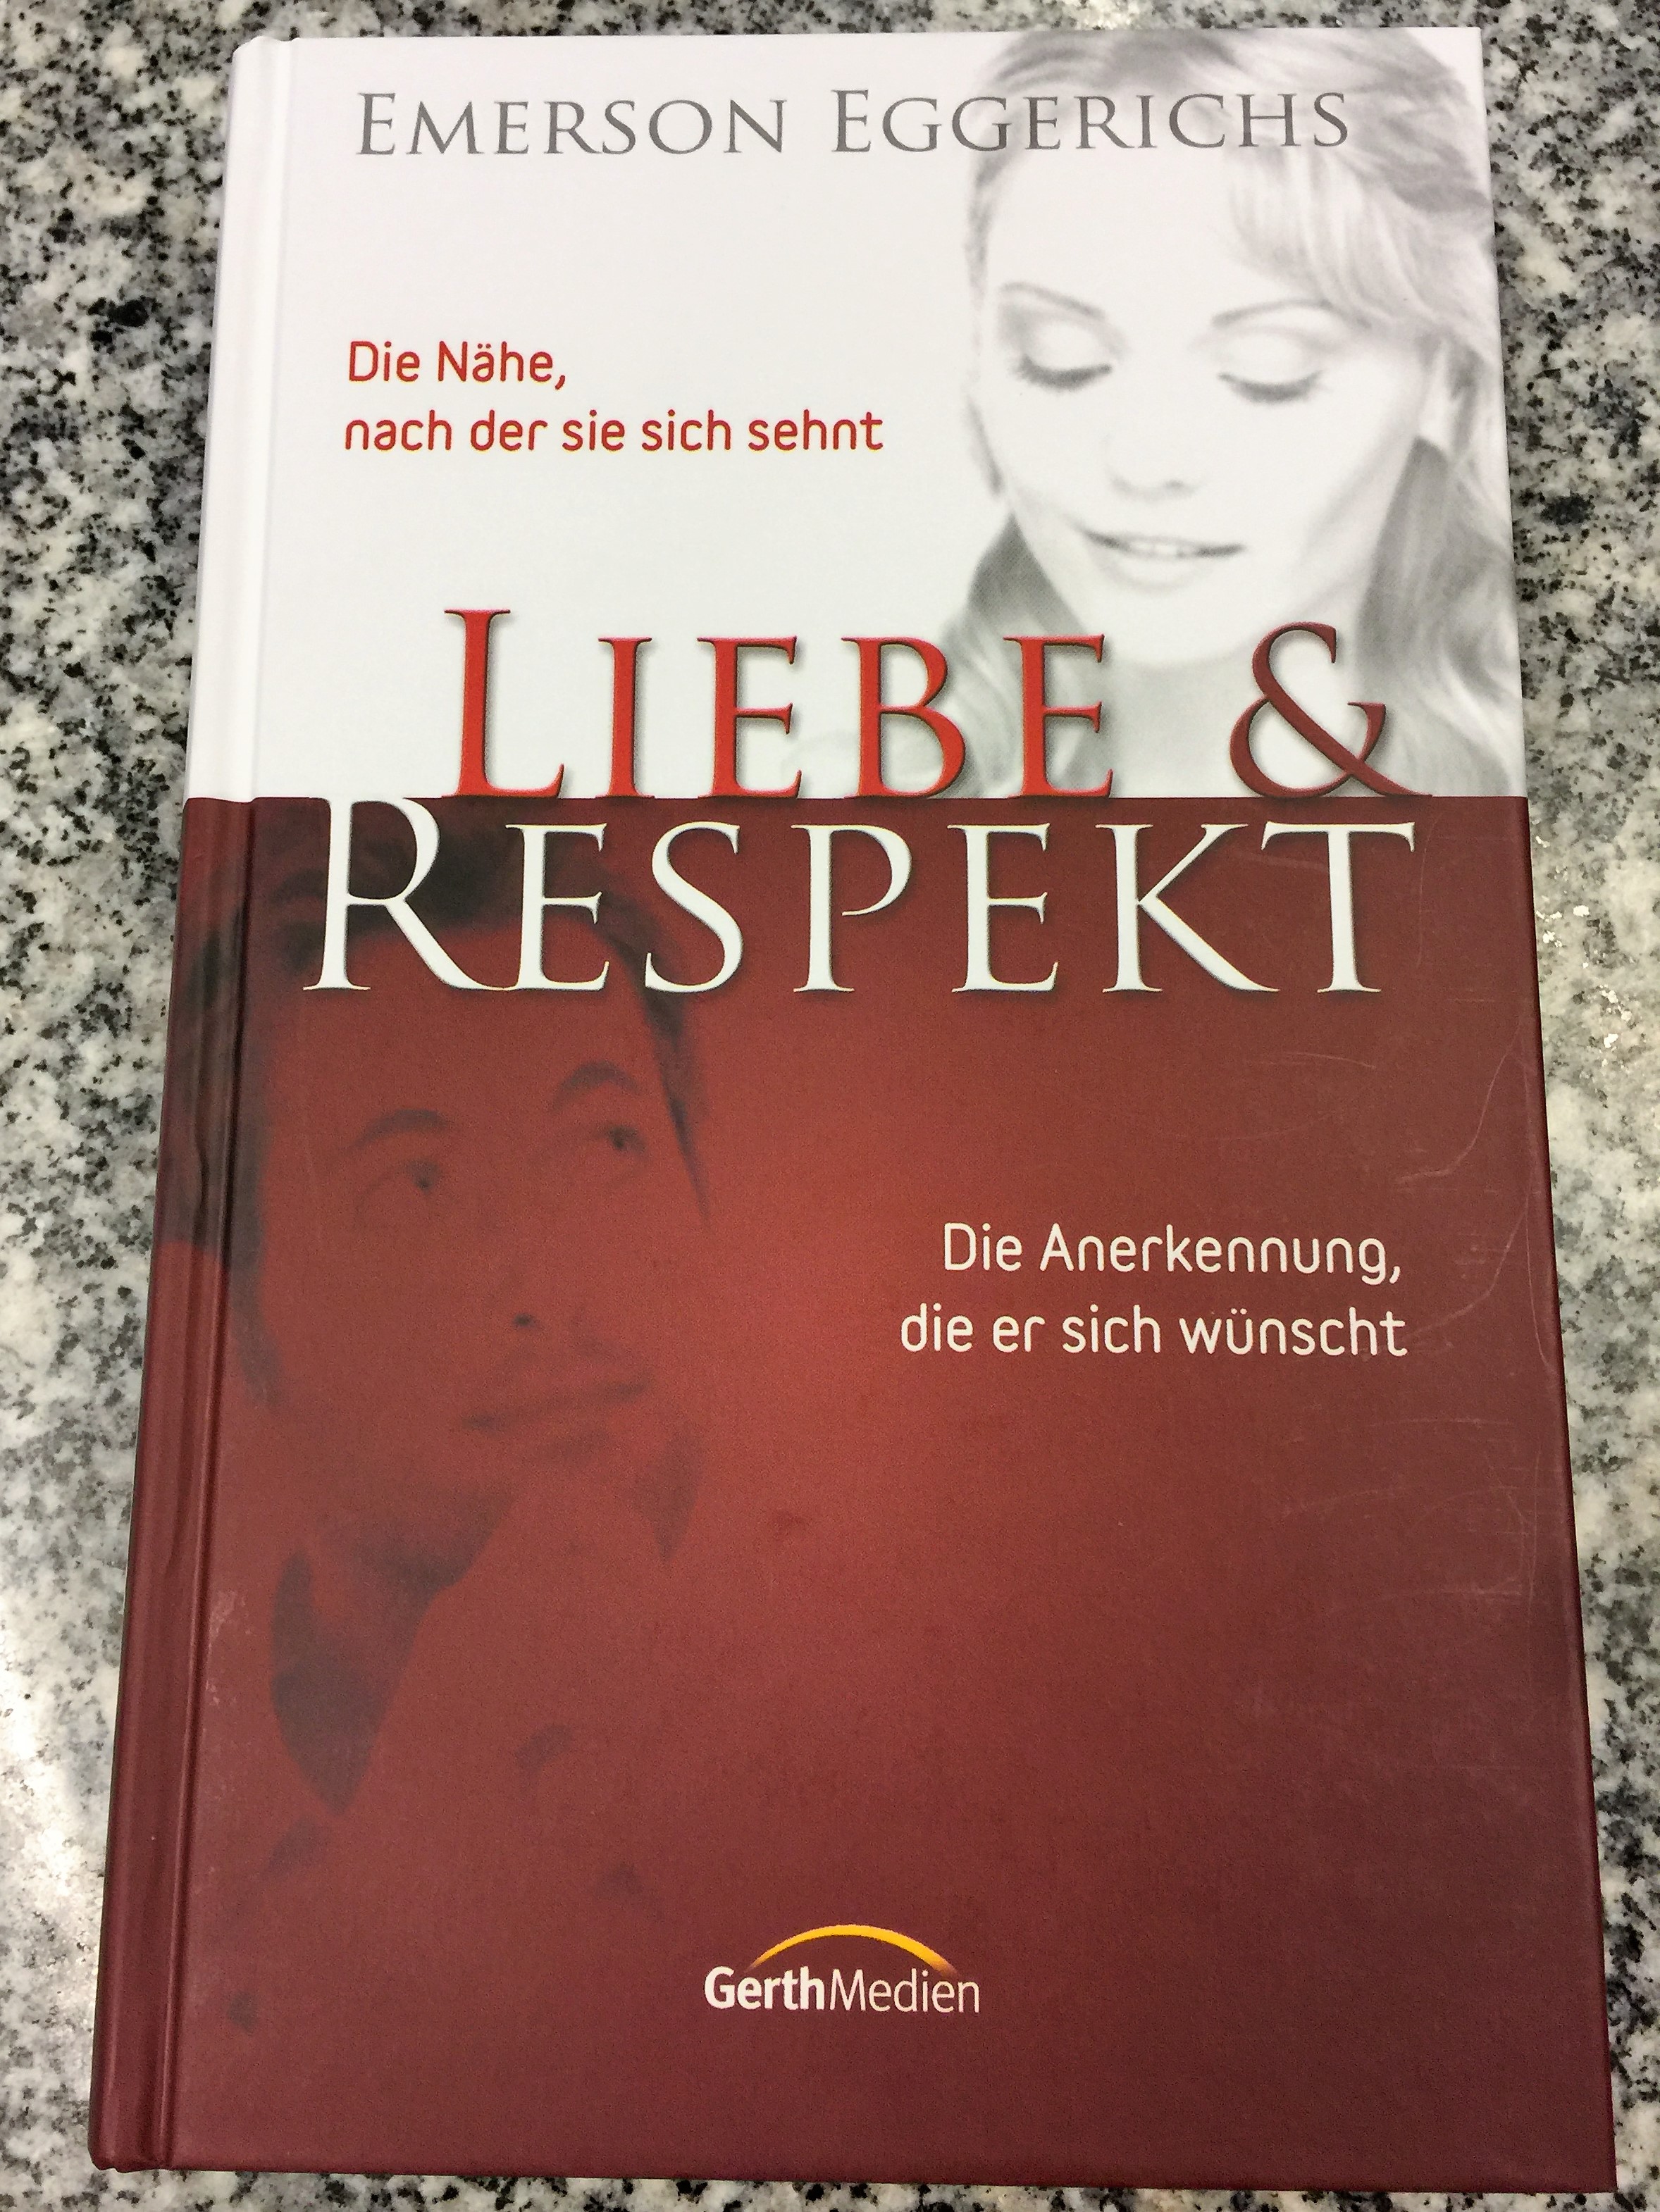 liebe-respekt-by-emerson-eggerichs-german-translation-of-love-and-respect-by-dr.-emerson-eggerich-1-.jpg